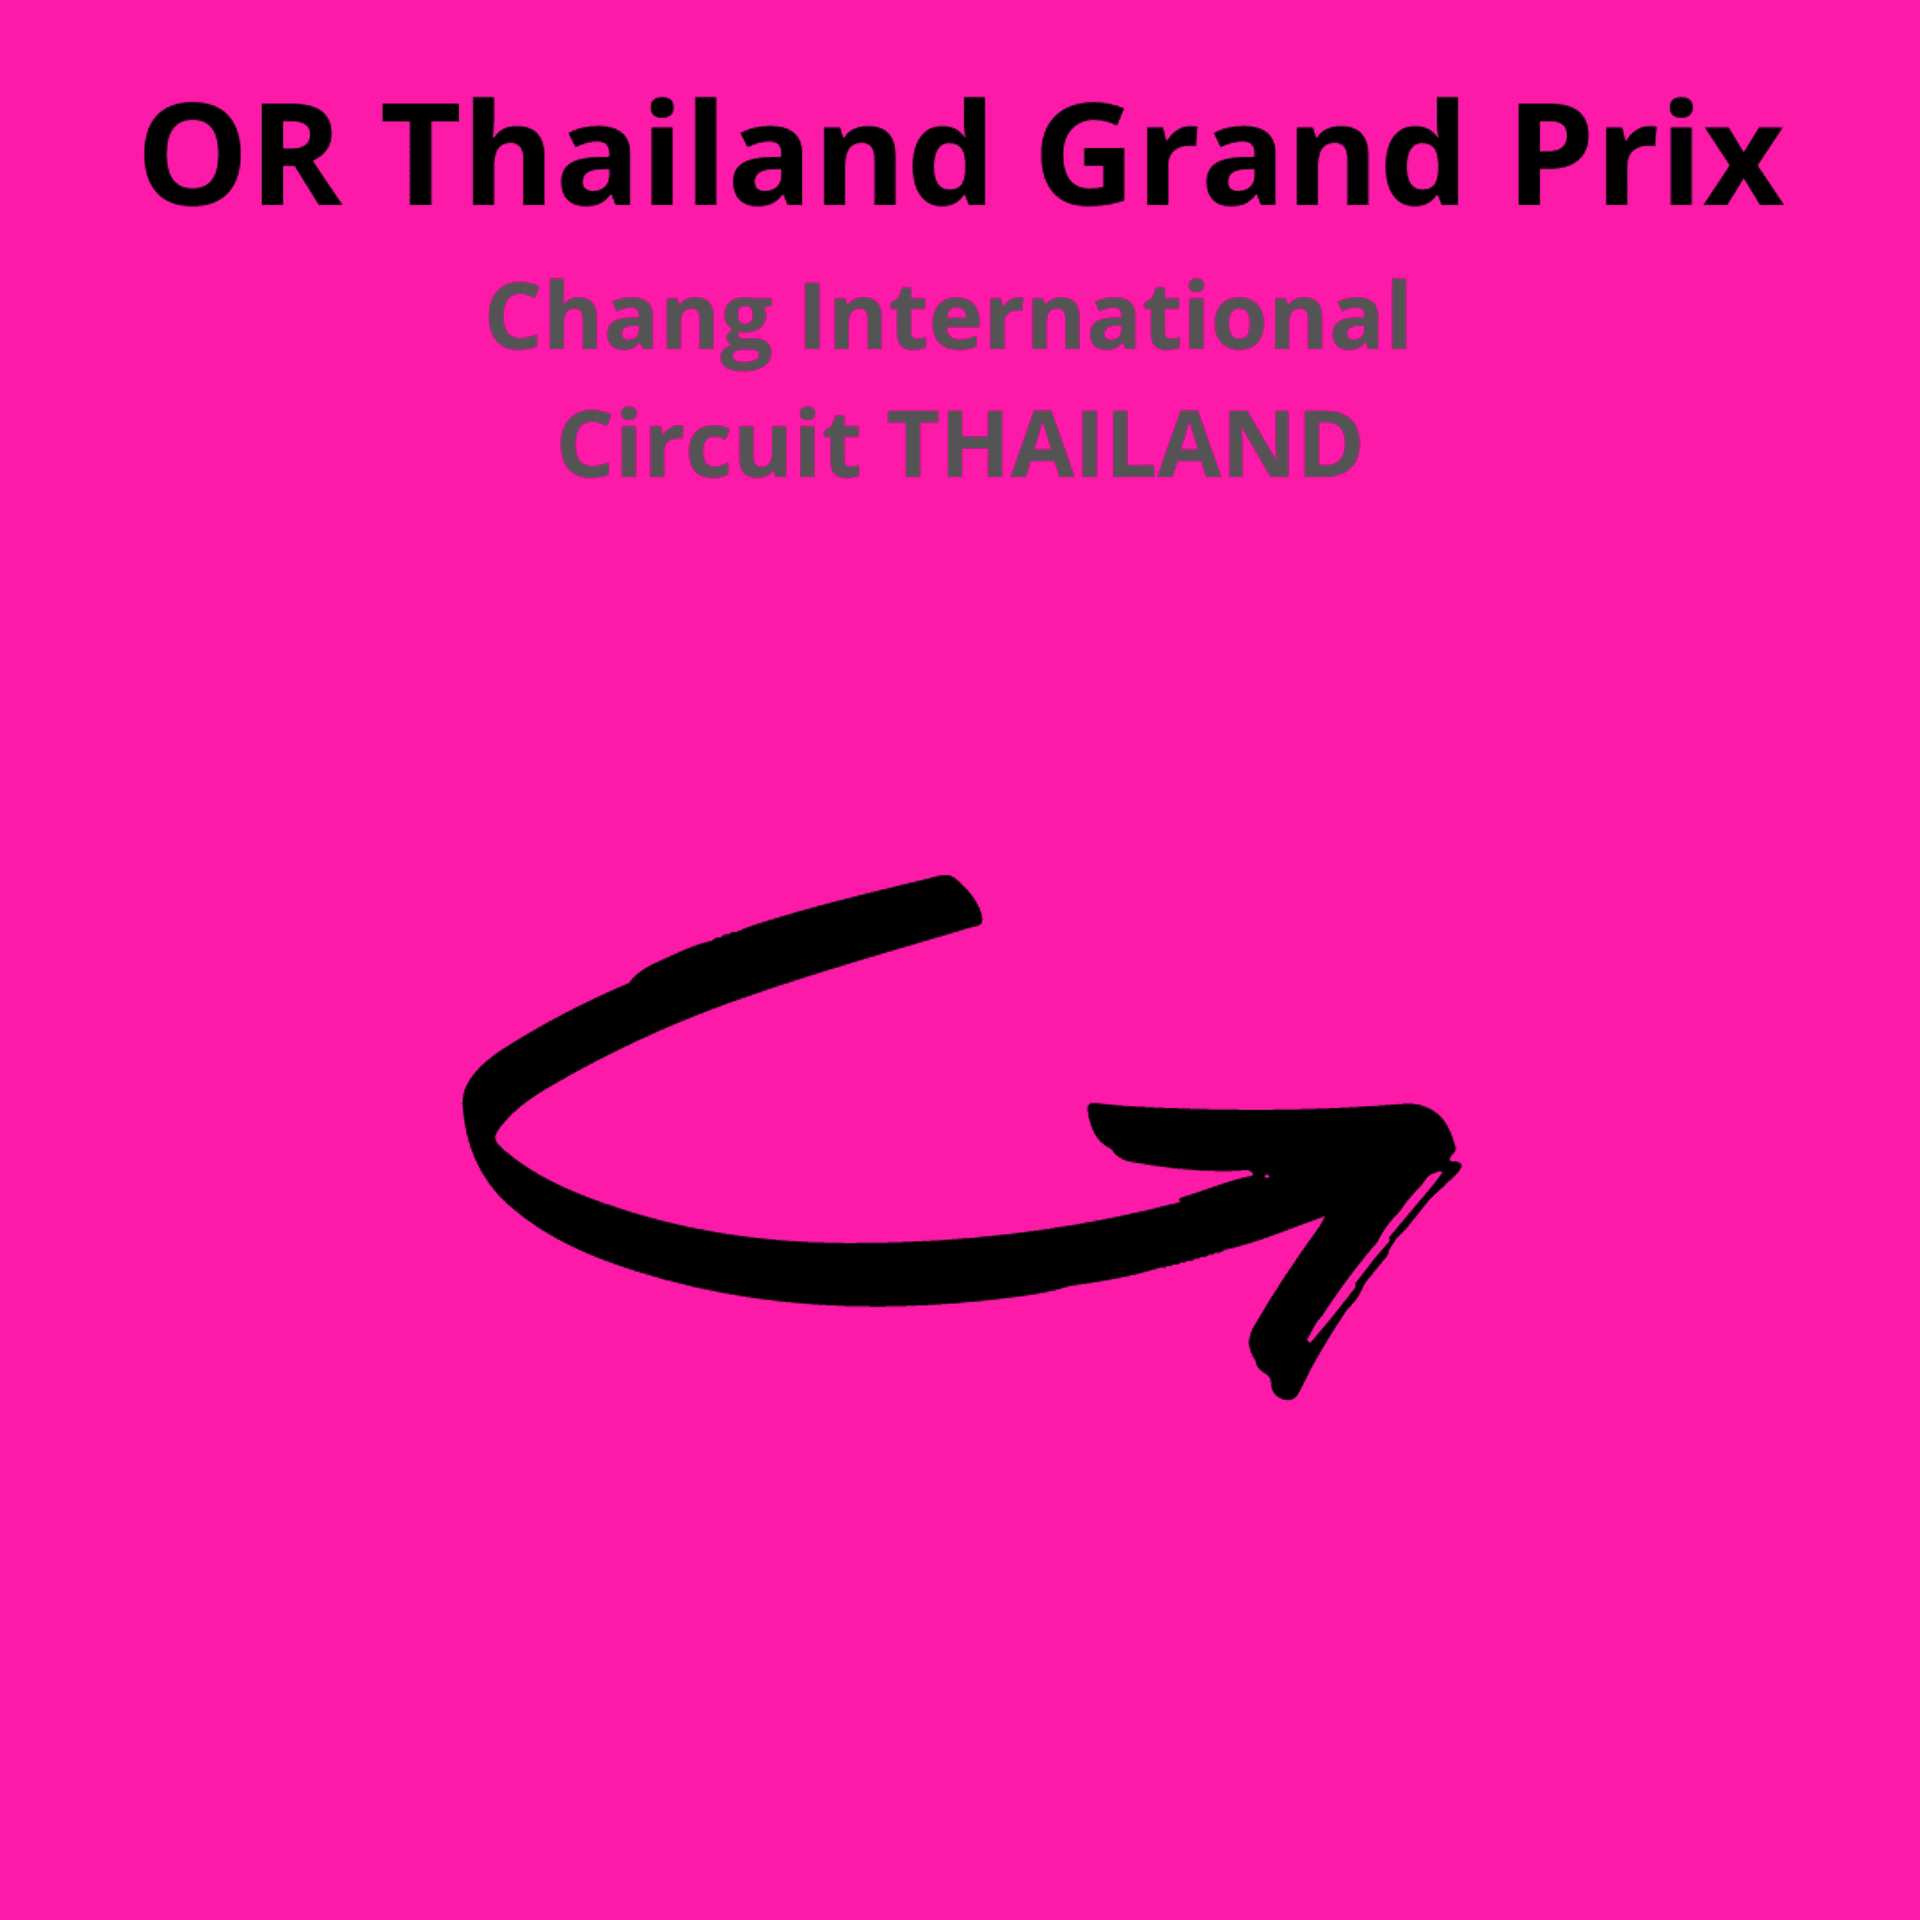 OR Thailand Grand Prix Chang International Circuit. Curve